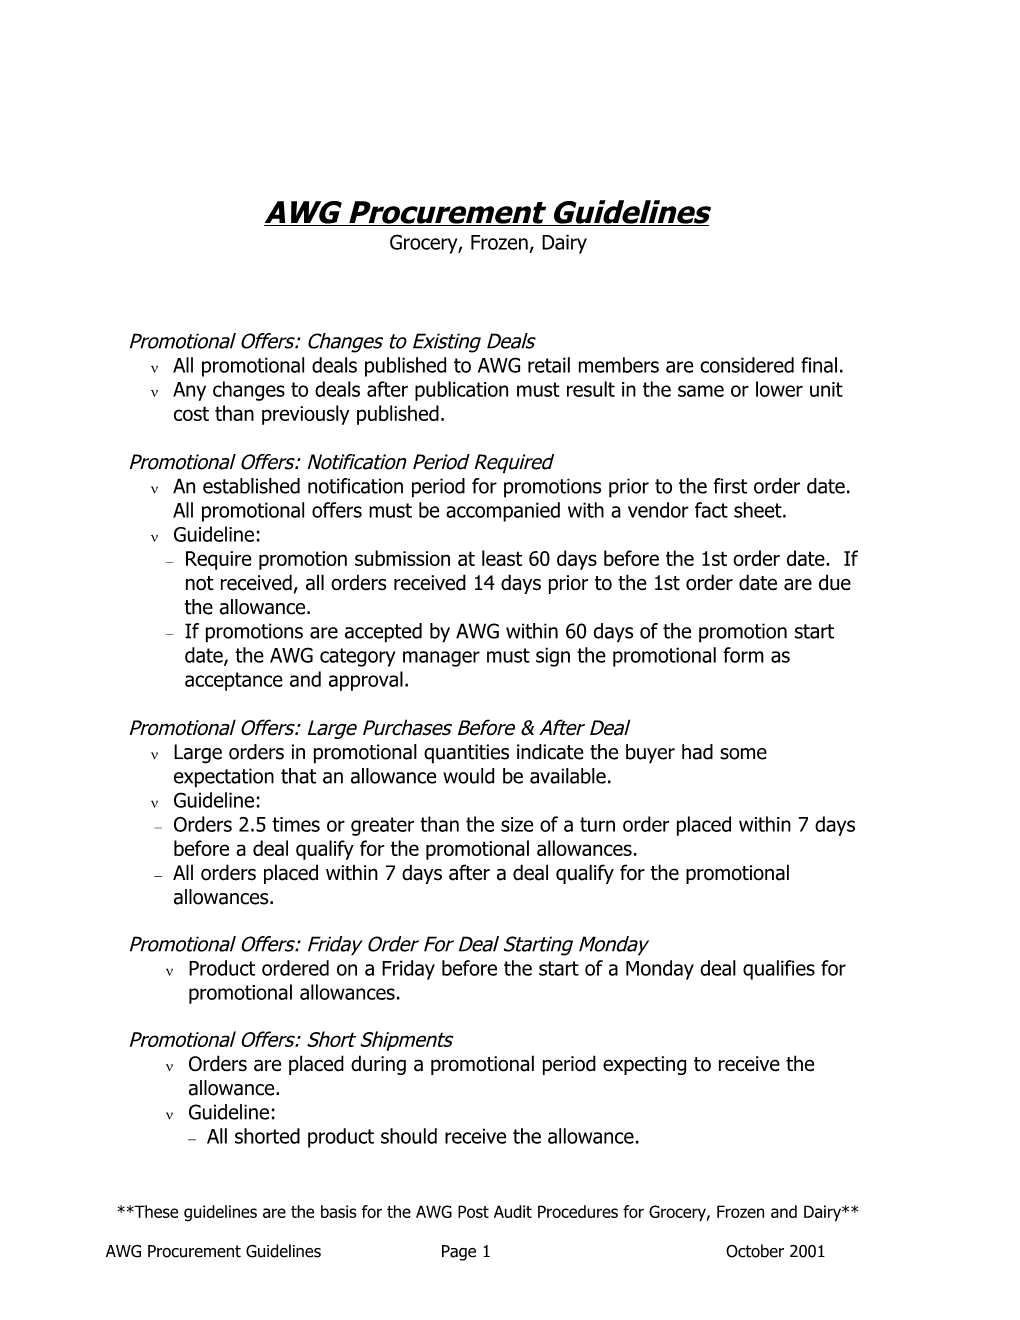 AWG Post Audit & Procurement Guidelines